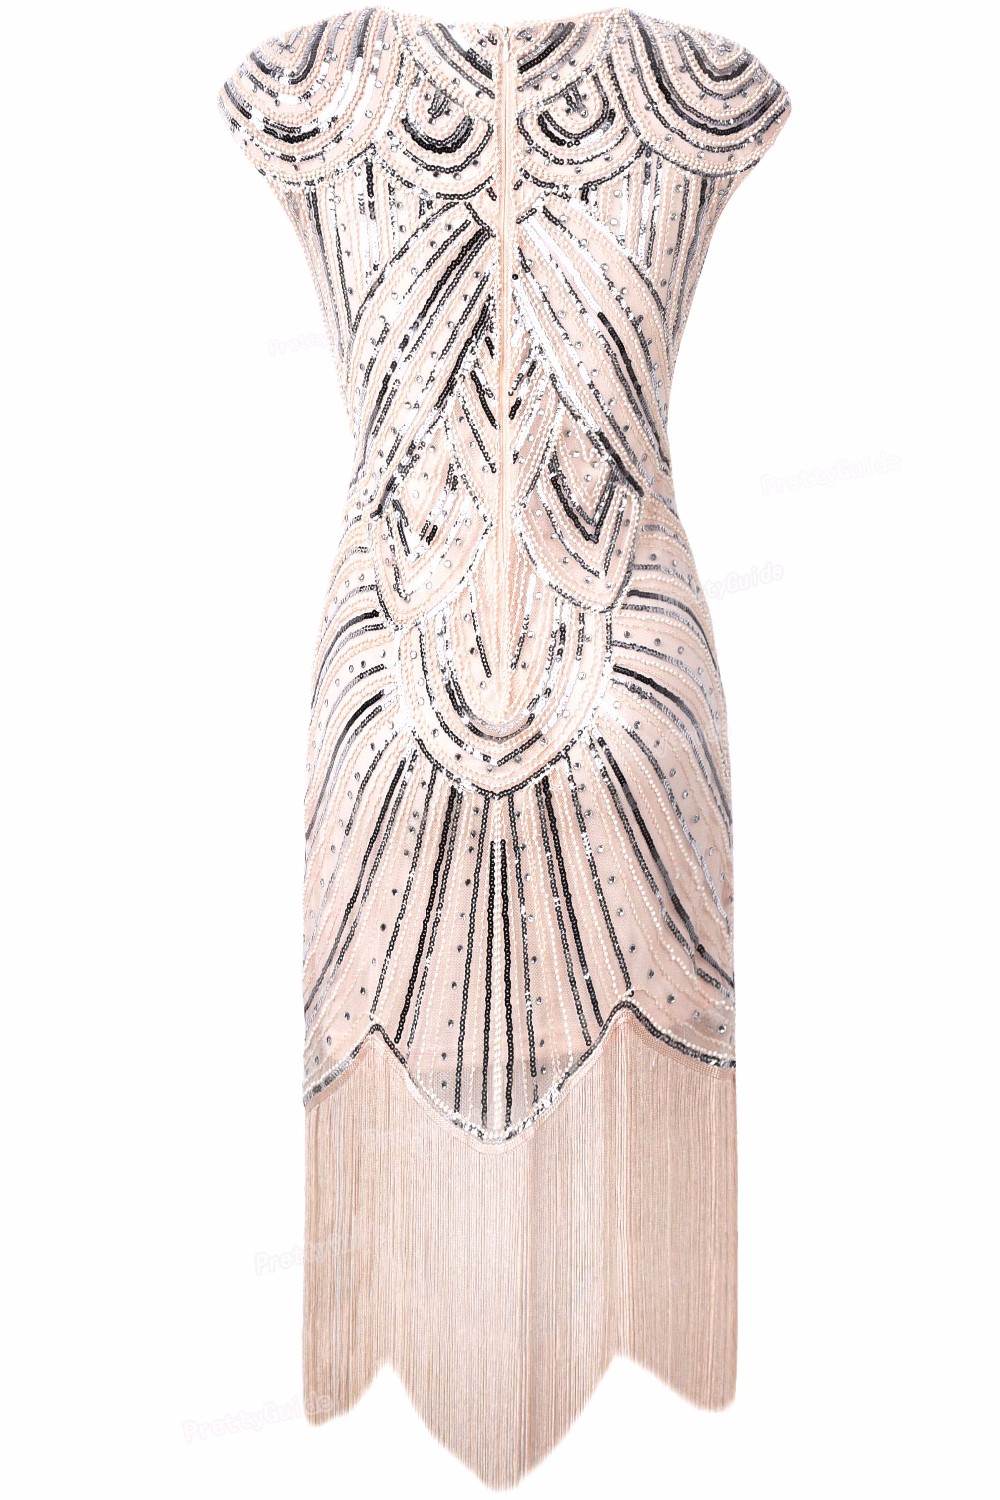 Vintage-Inspired-1920s-Gastby-Handmade-Diamond-Sequined-Embellished-Fringed-Flapper-Party-Dress-32564560310